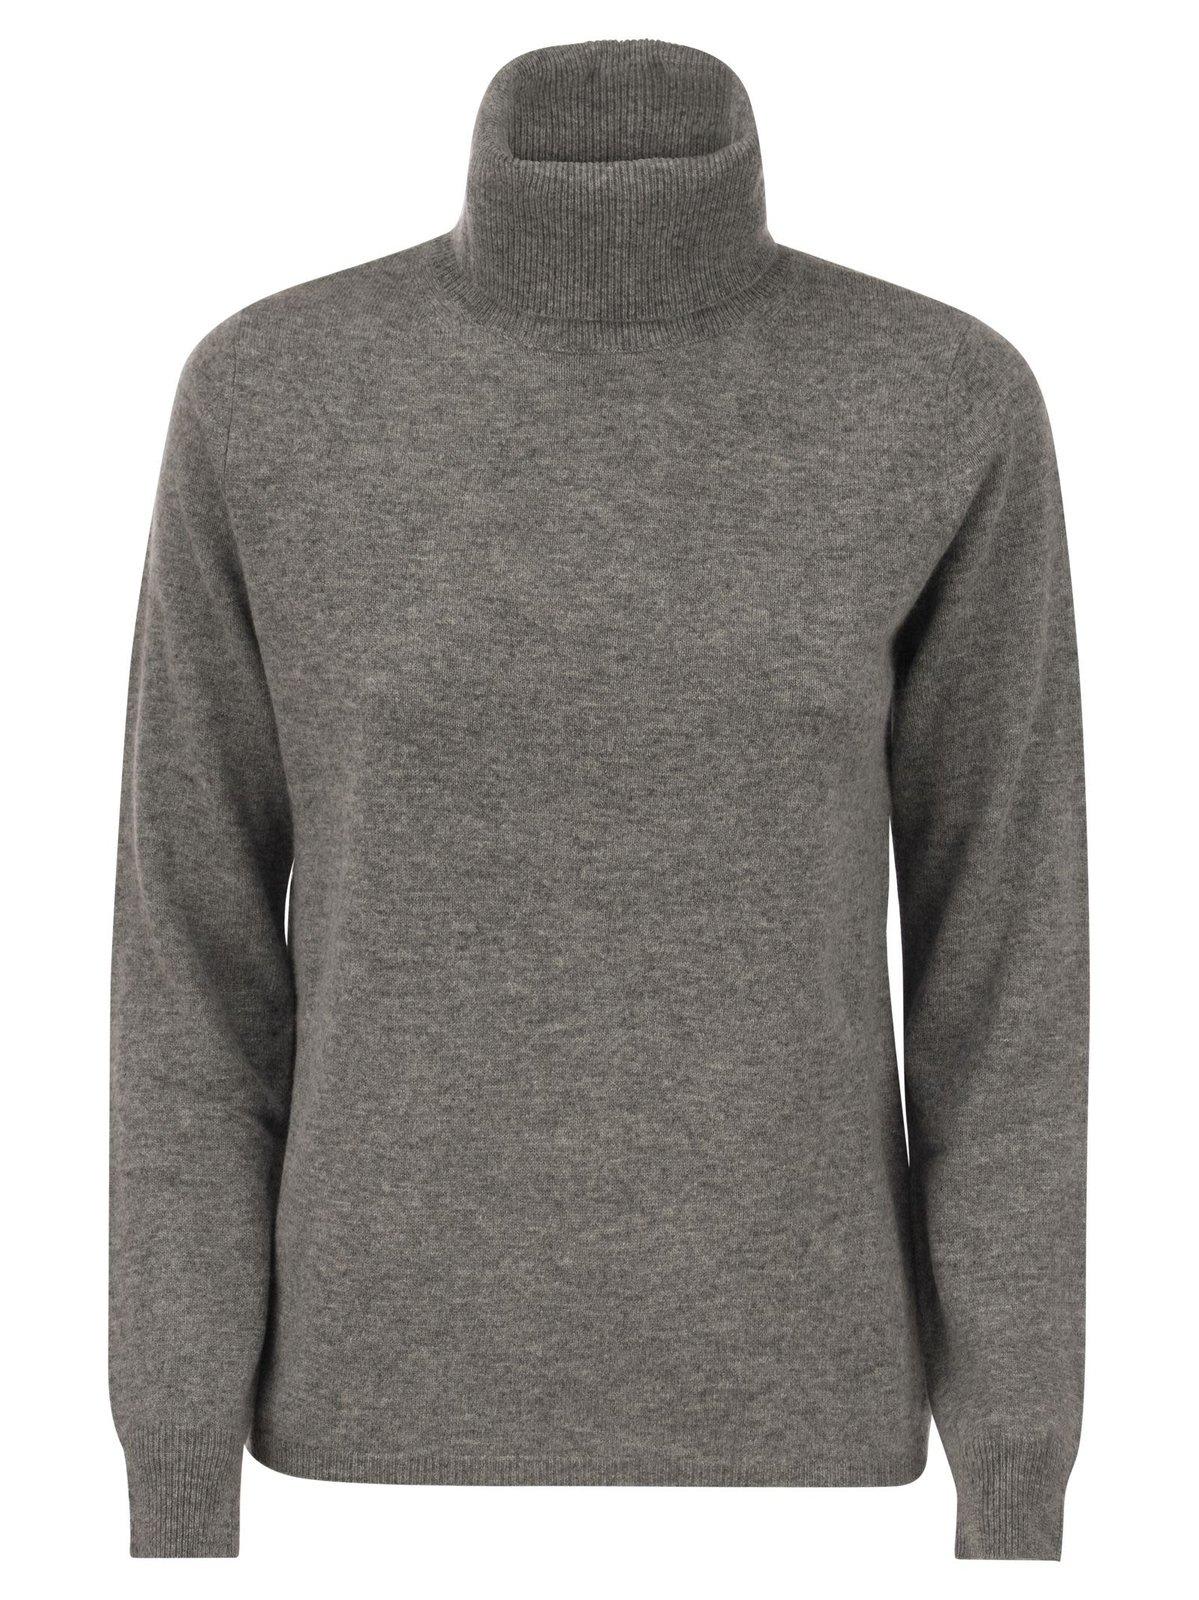 Max Mara Studio Turtleneck Long Sleeved Sweater